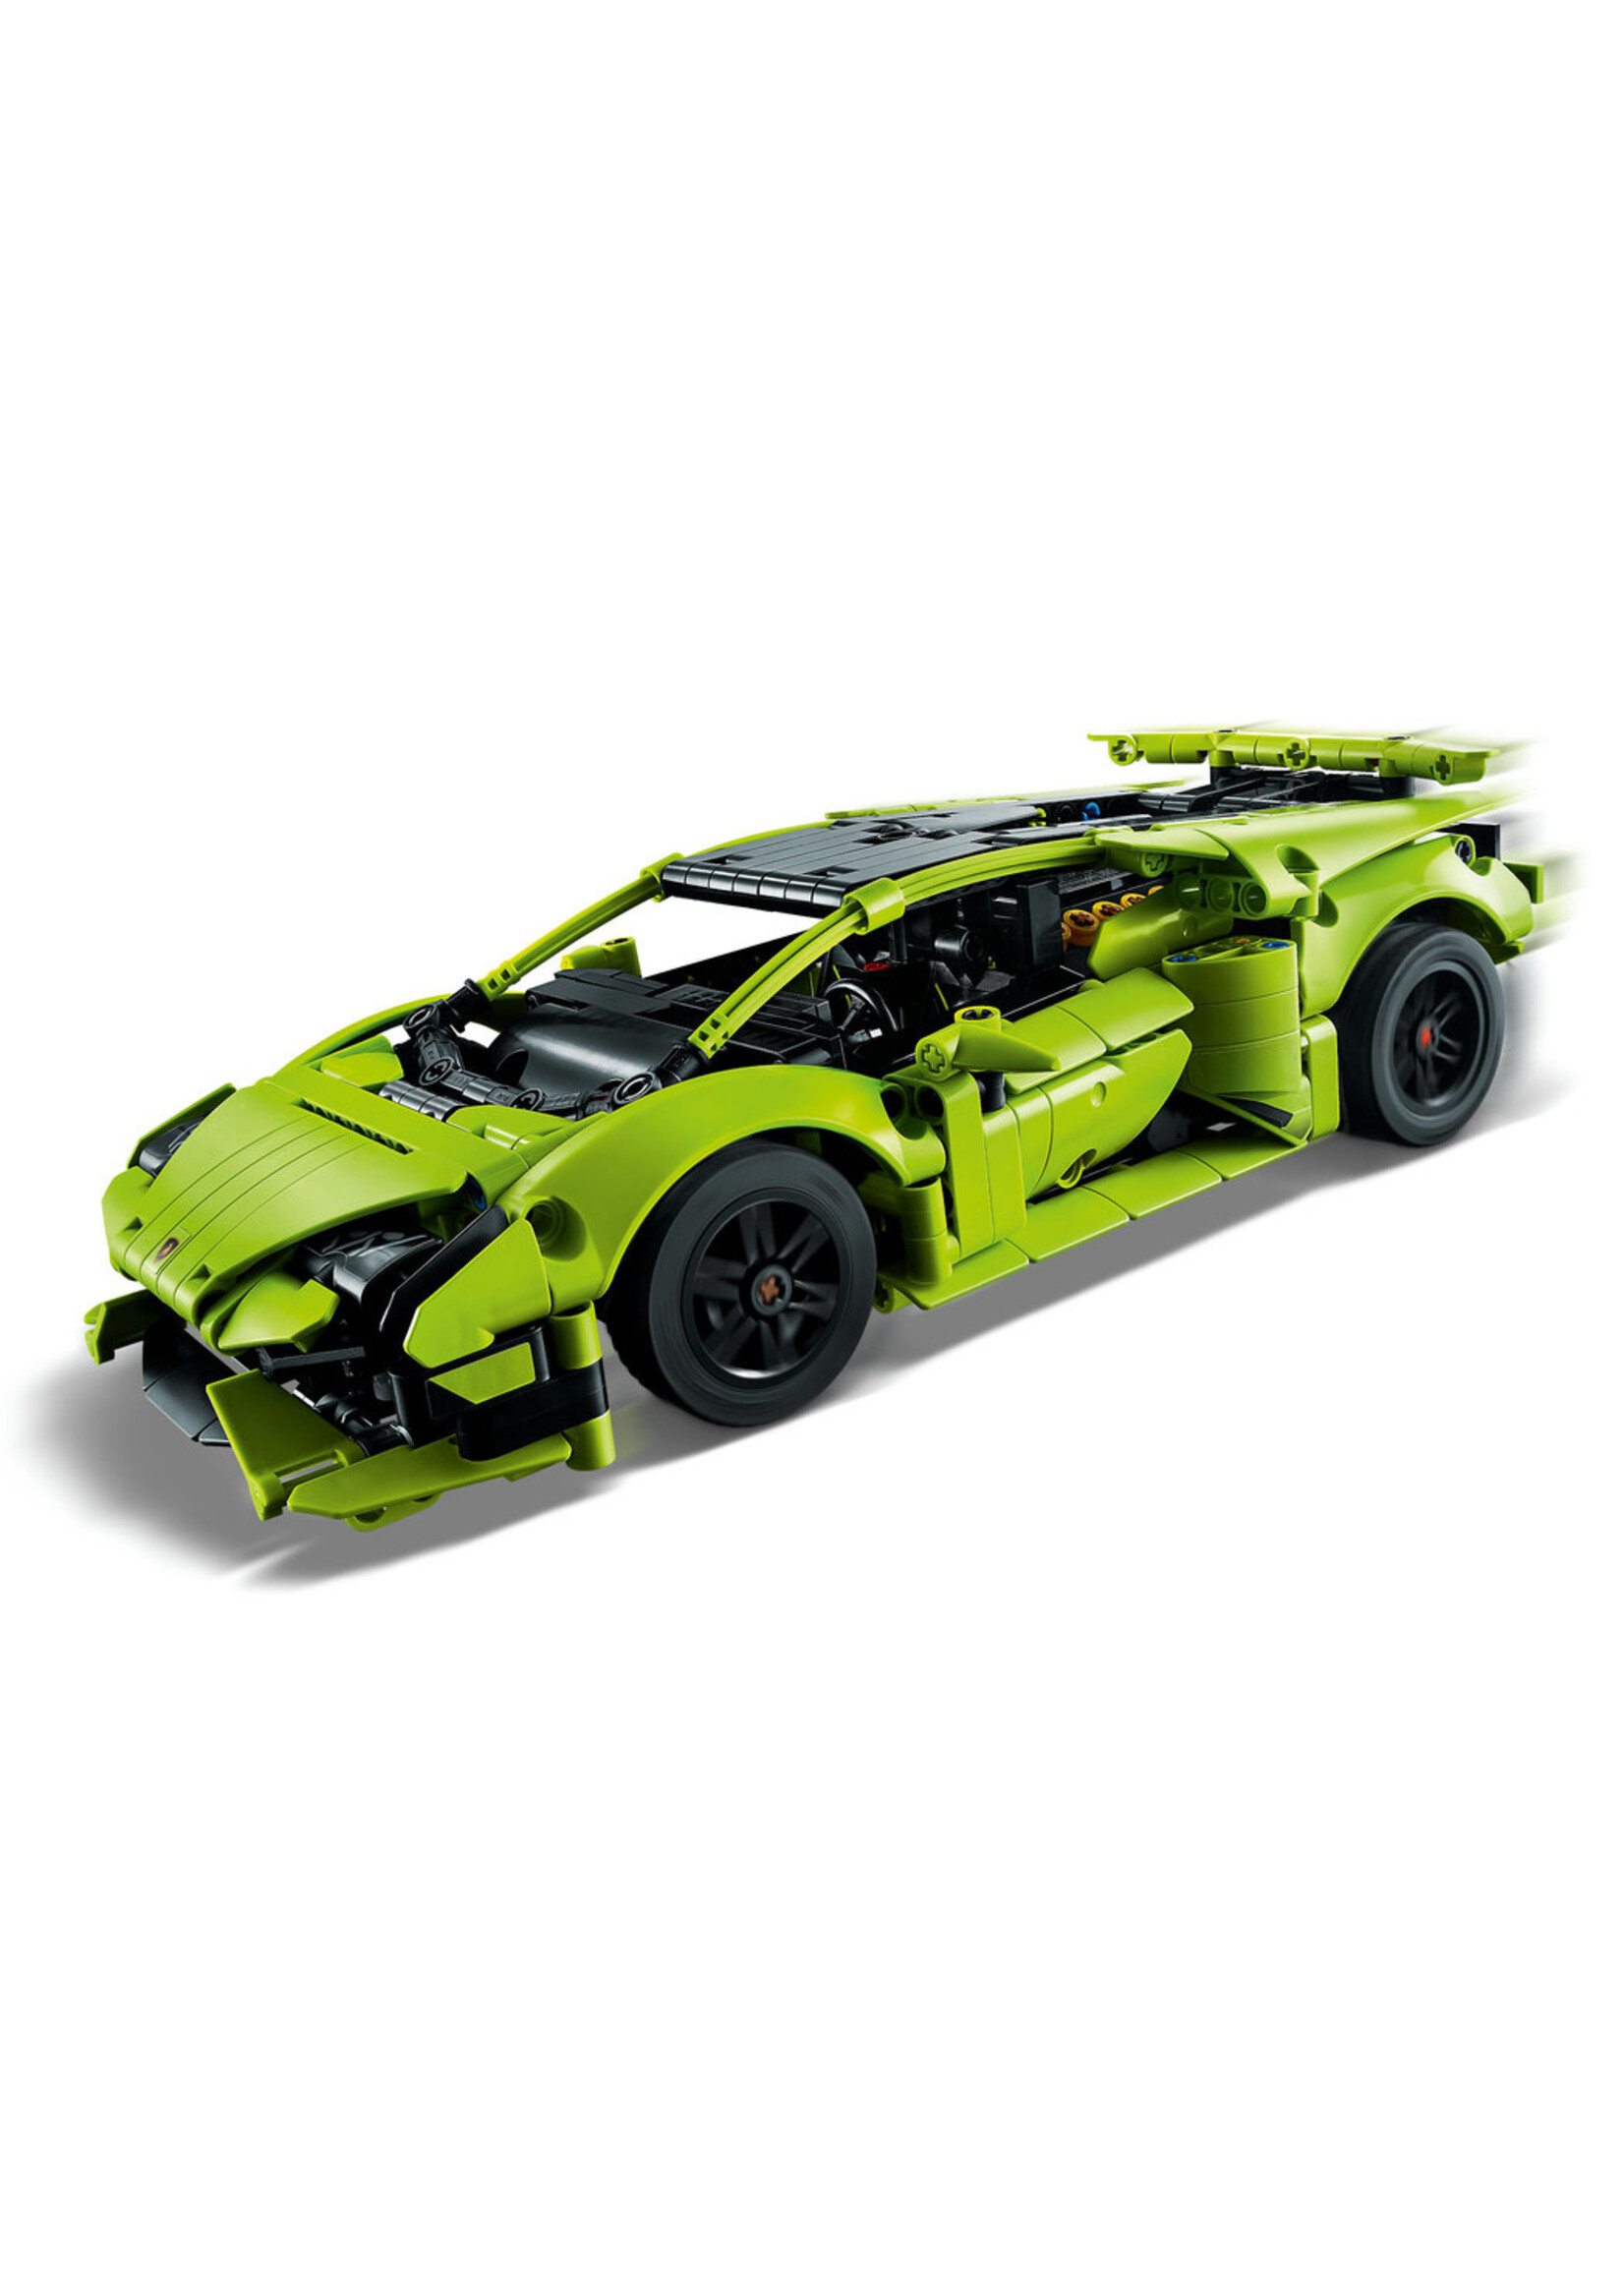 LEGO Technic 42161 Lamborghini Huracán Tecnica - LEGO Speed Build Review 